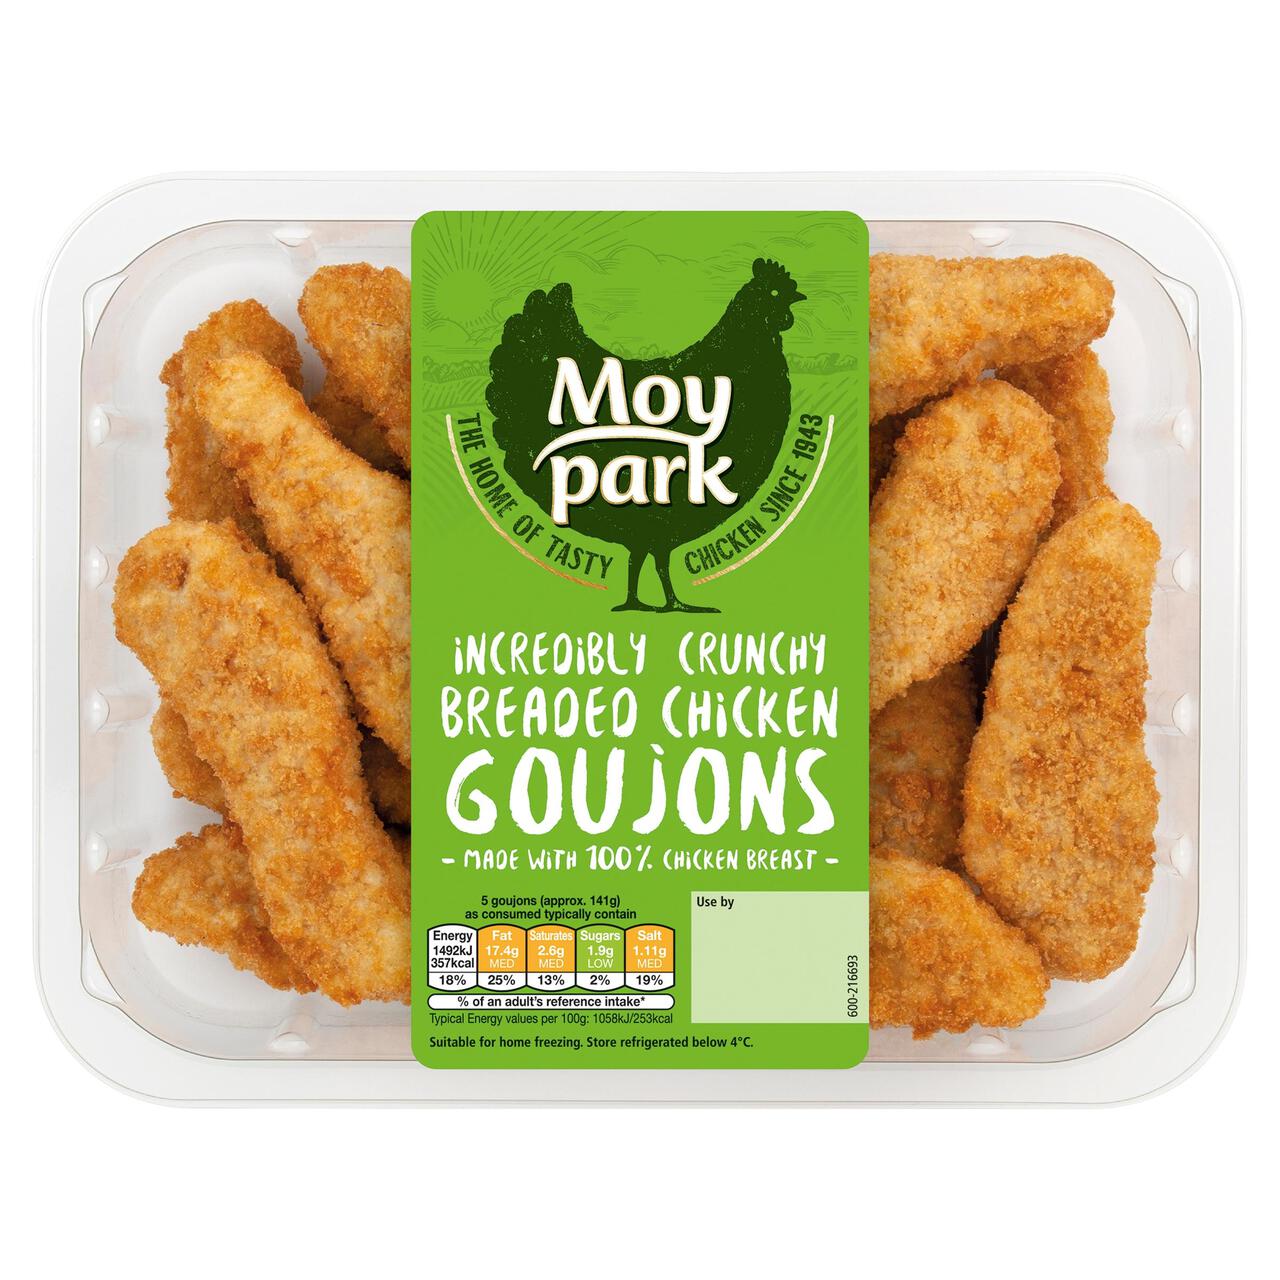 Moy Park Breaded Chicken Goujons 430g